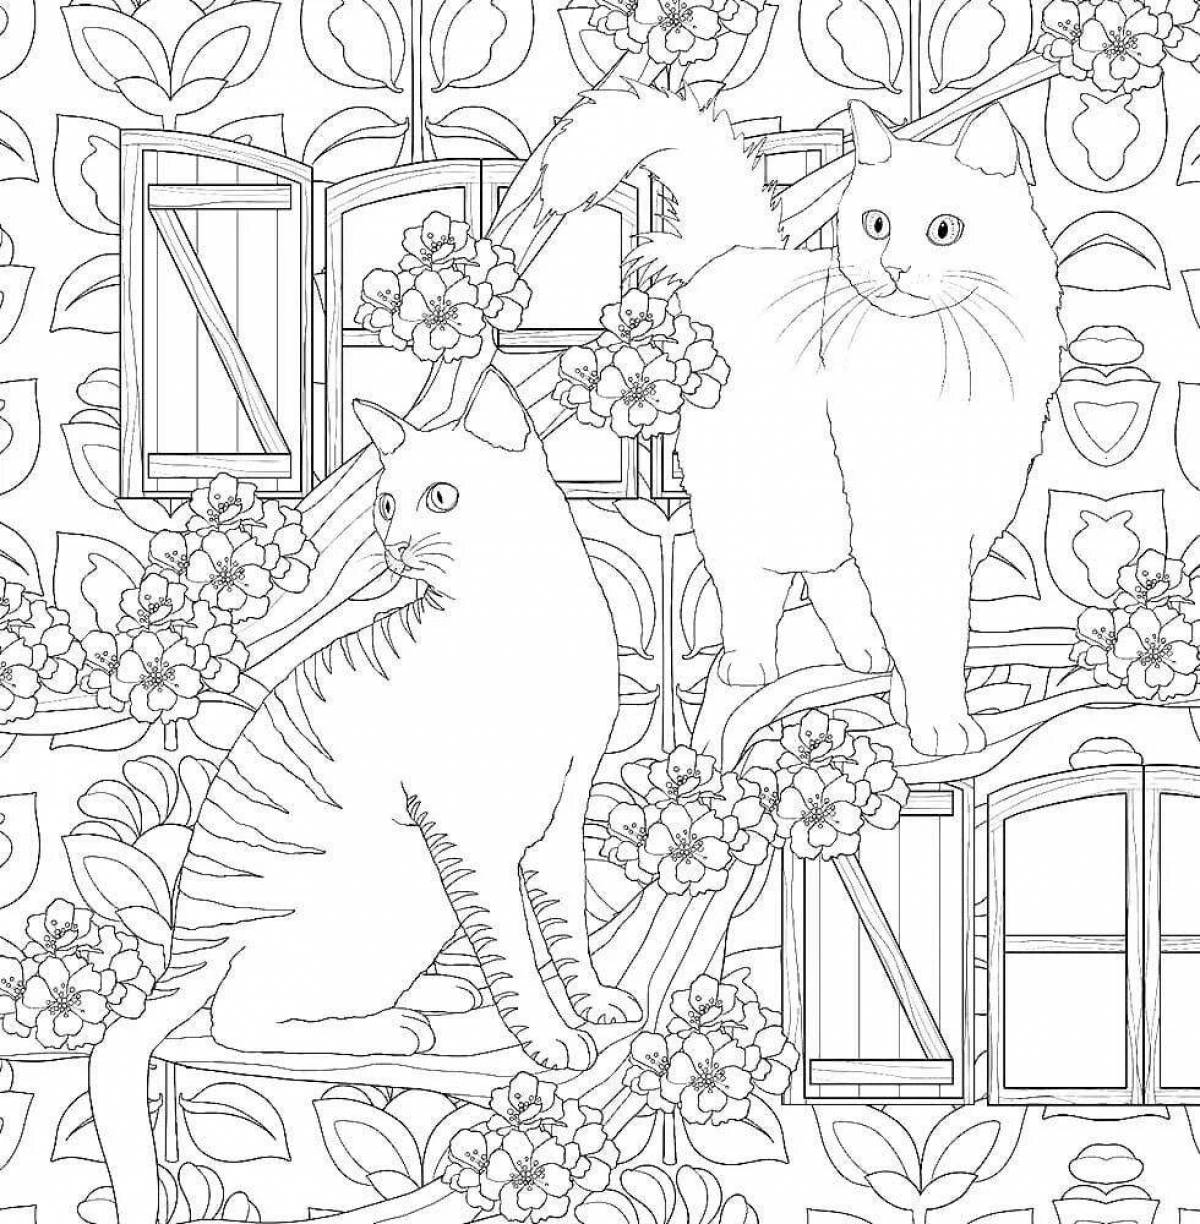 Splendid cat therapy anti-stress coloring book